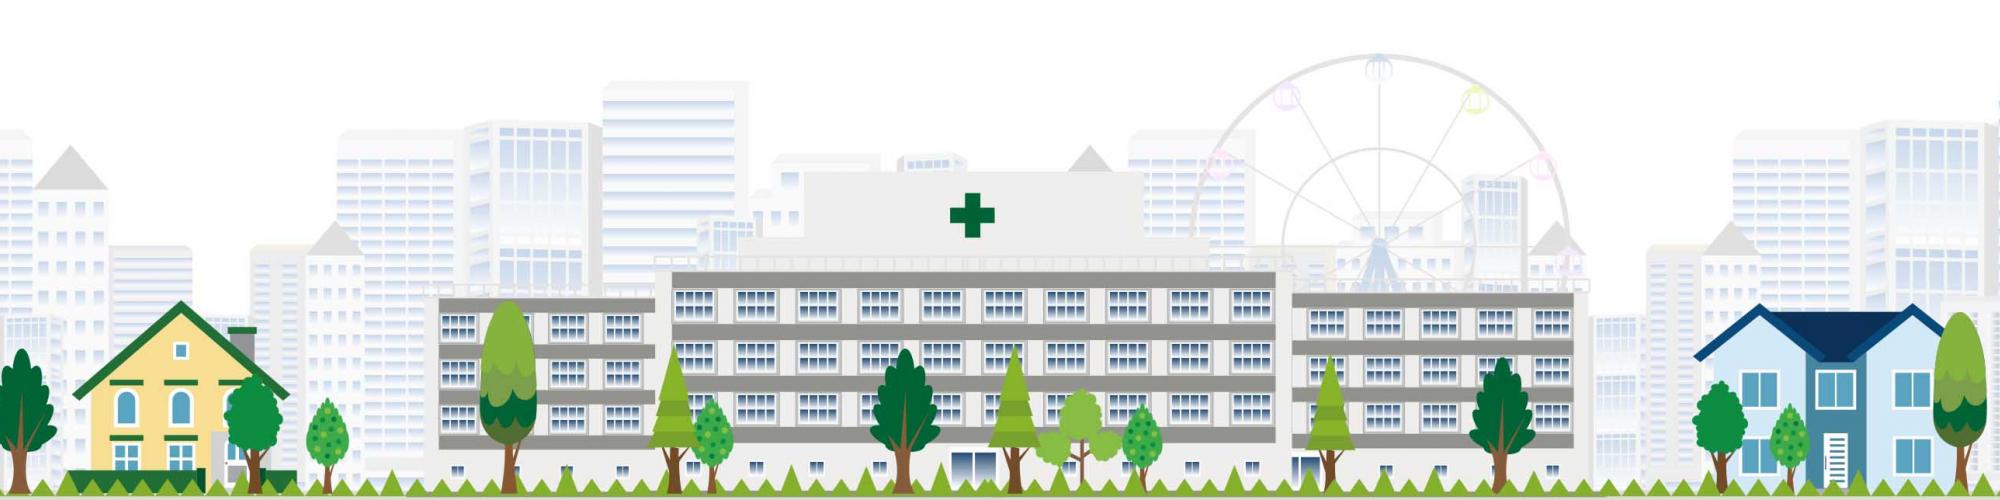 Gesundheitszentrum RECURA GmbH - MVZ Coswig